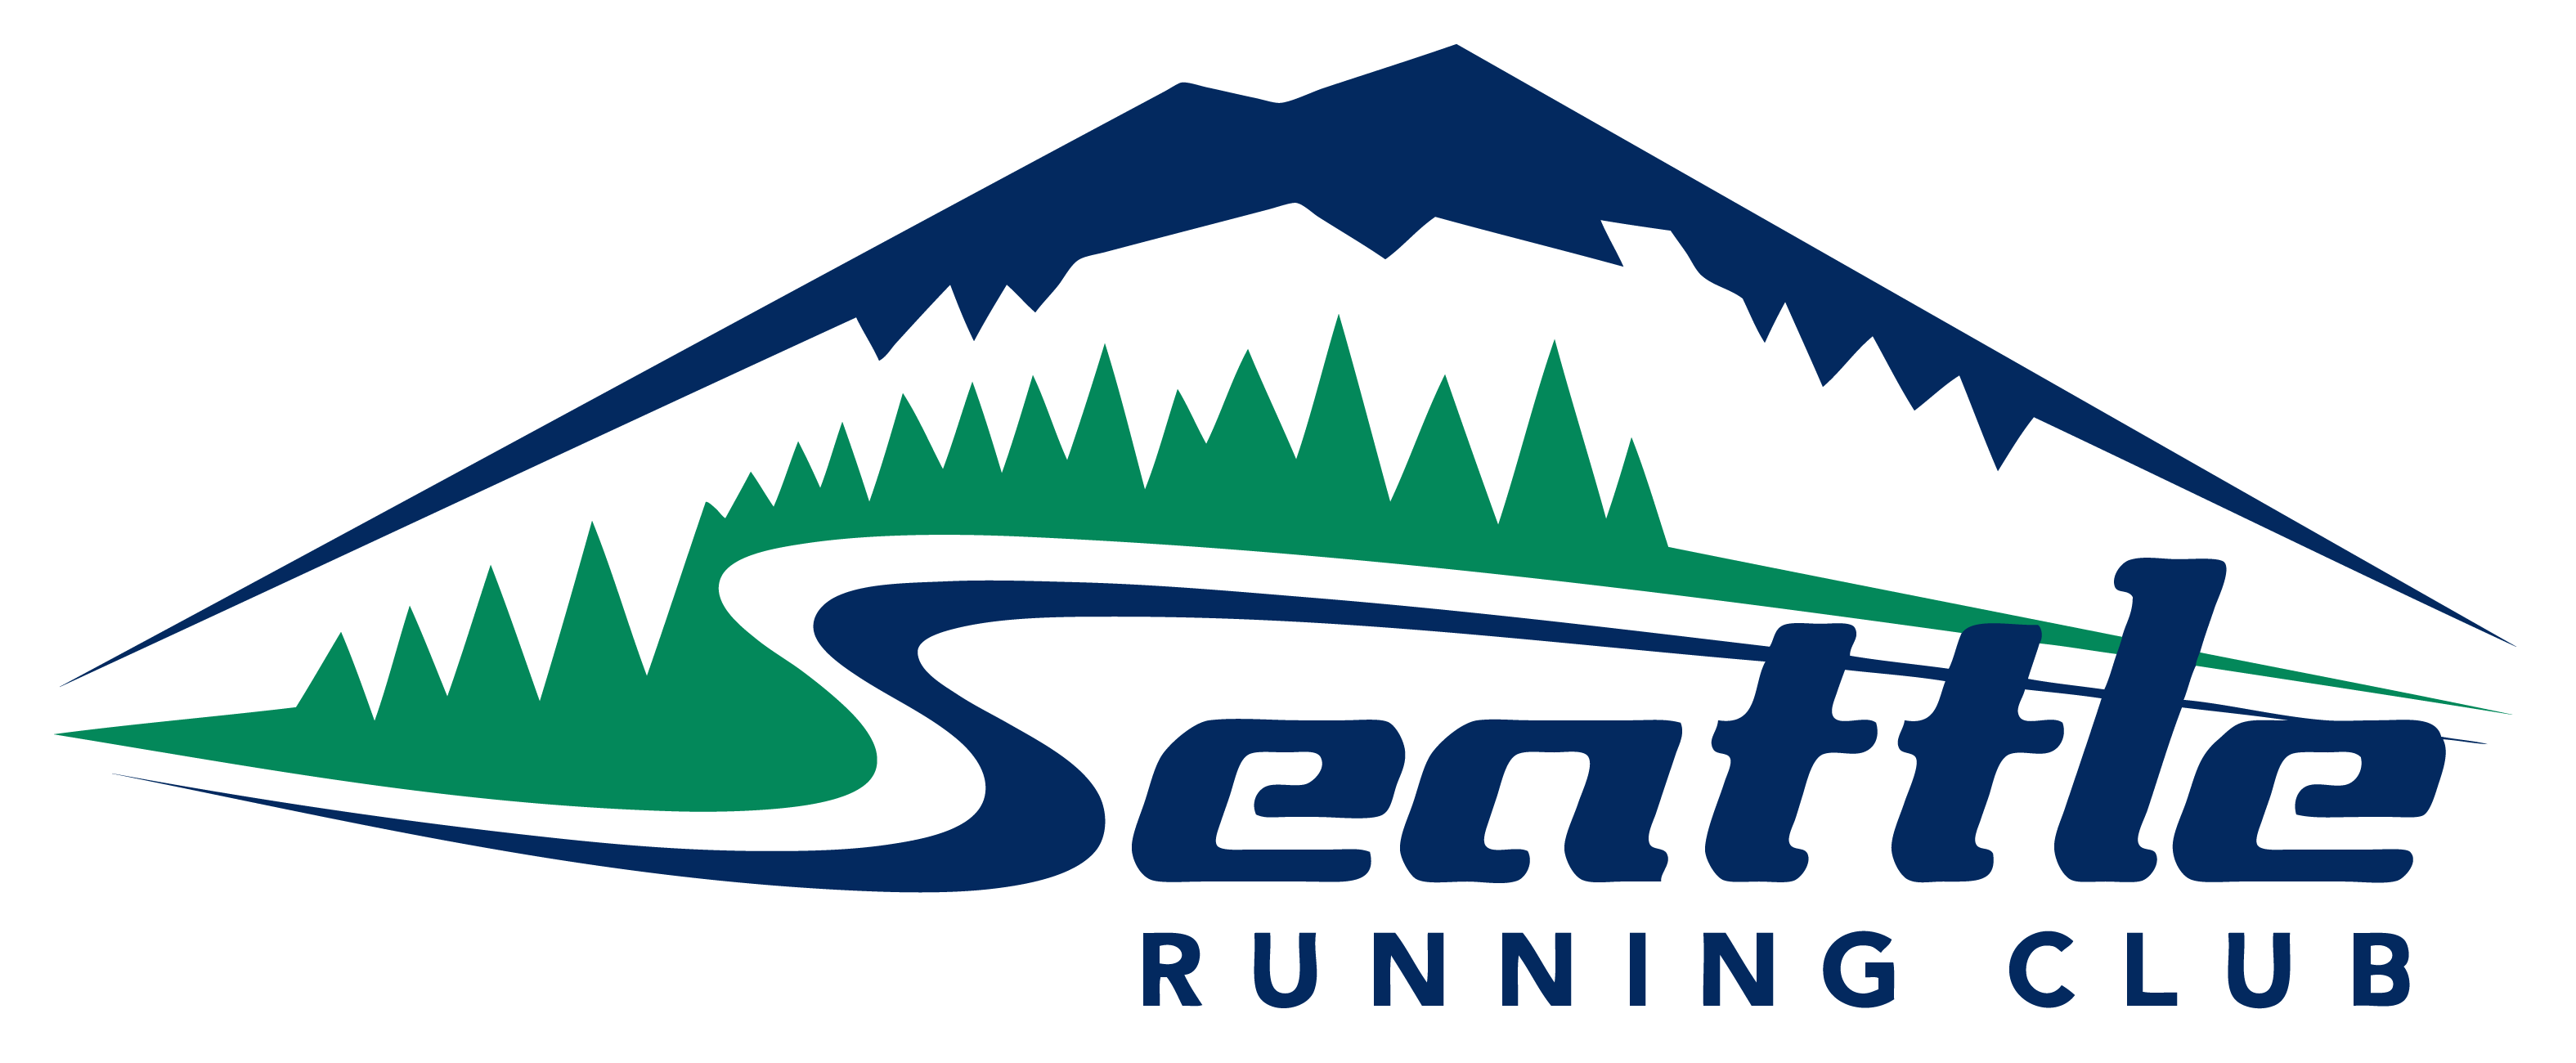 Seattle Running Club logo.